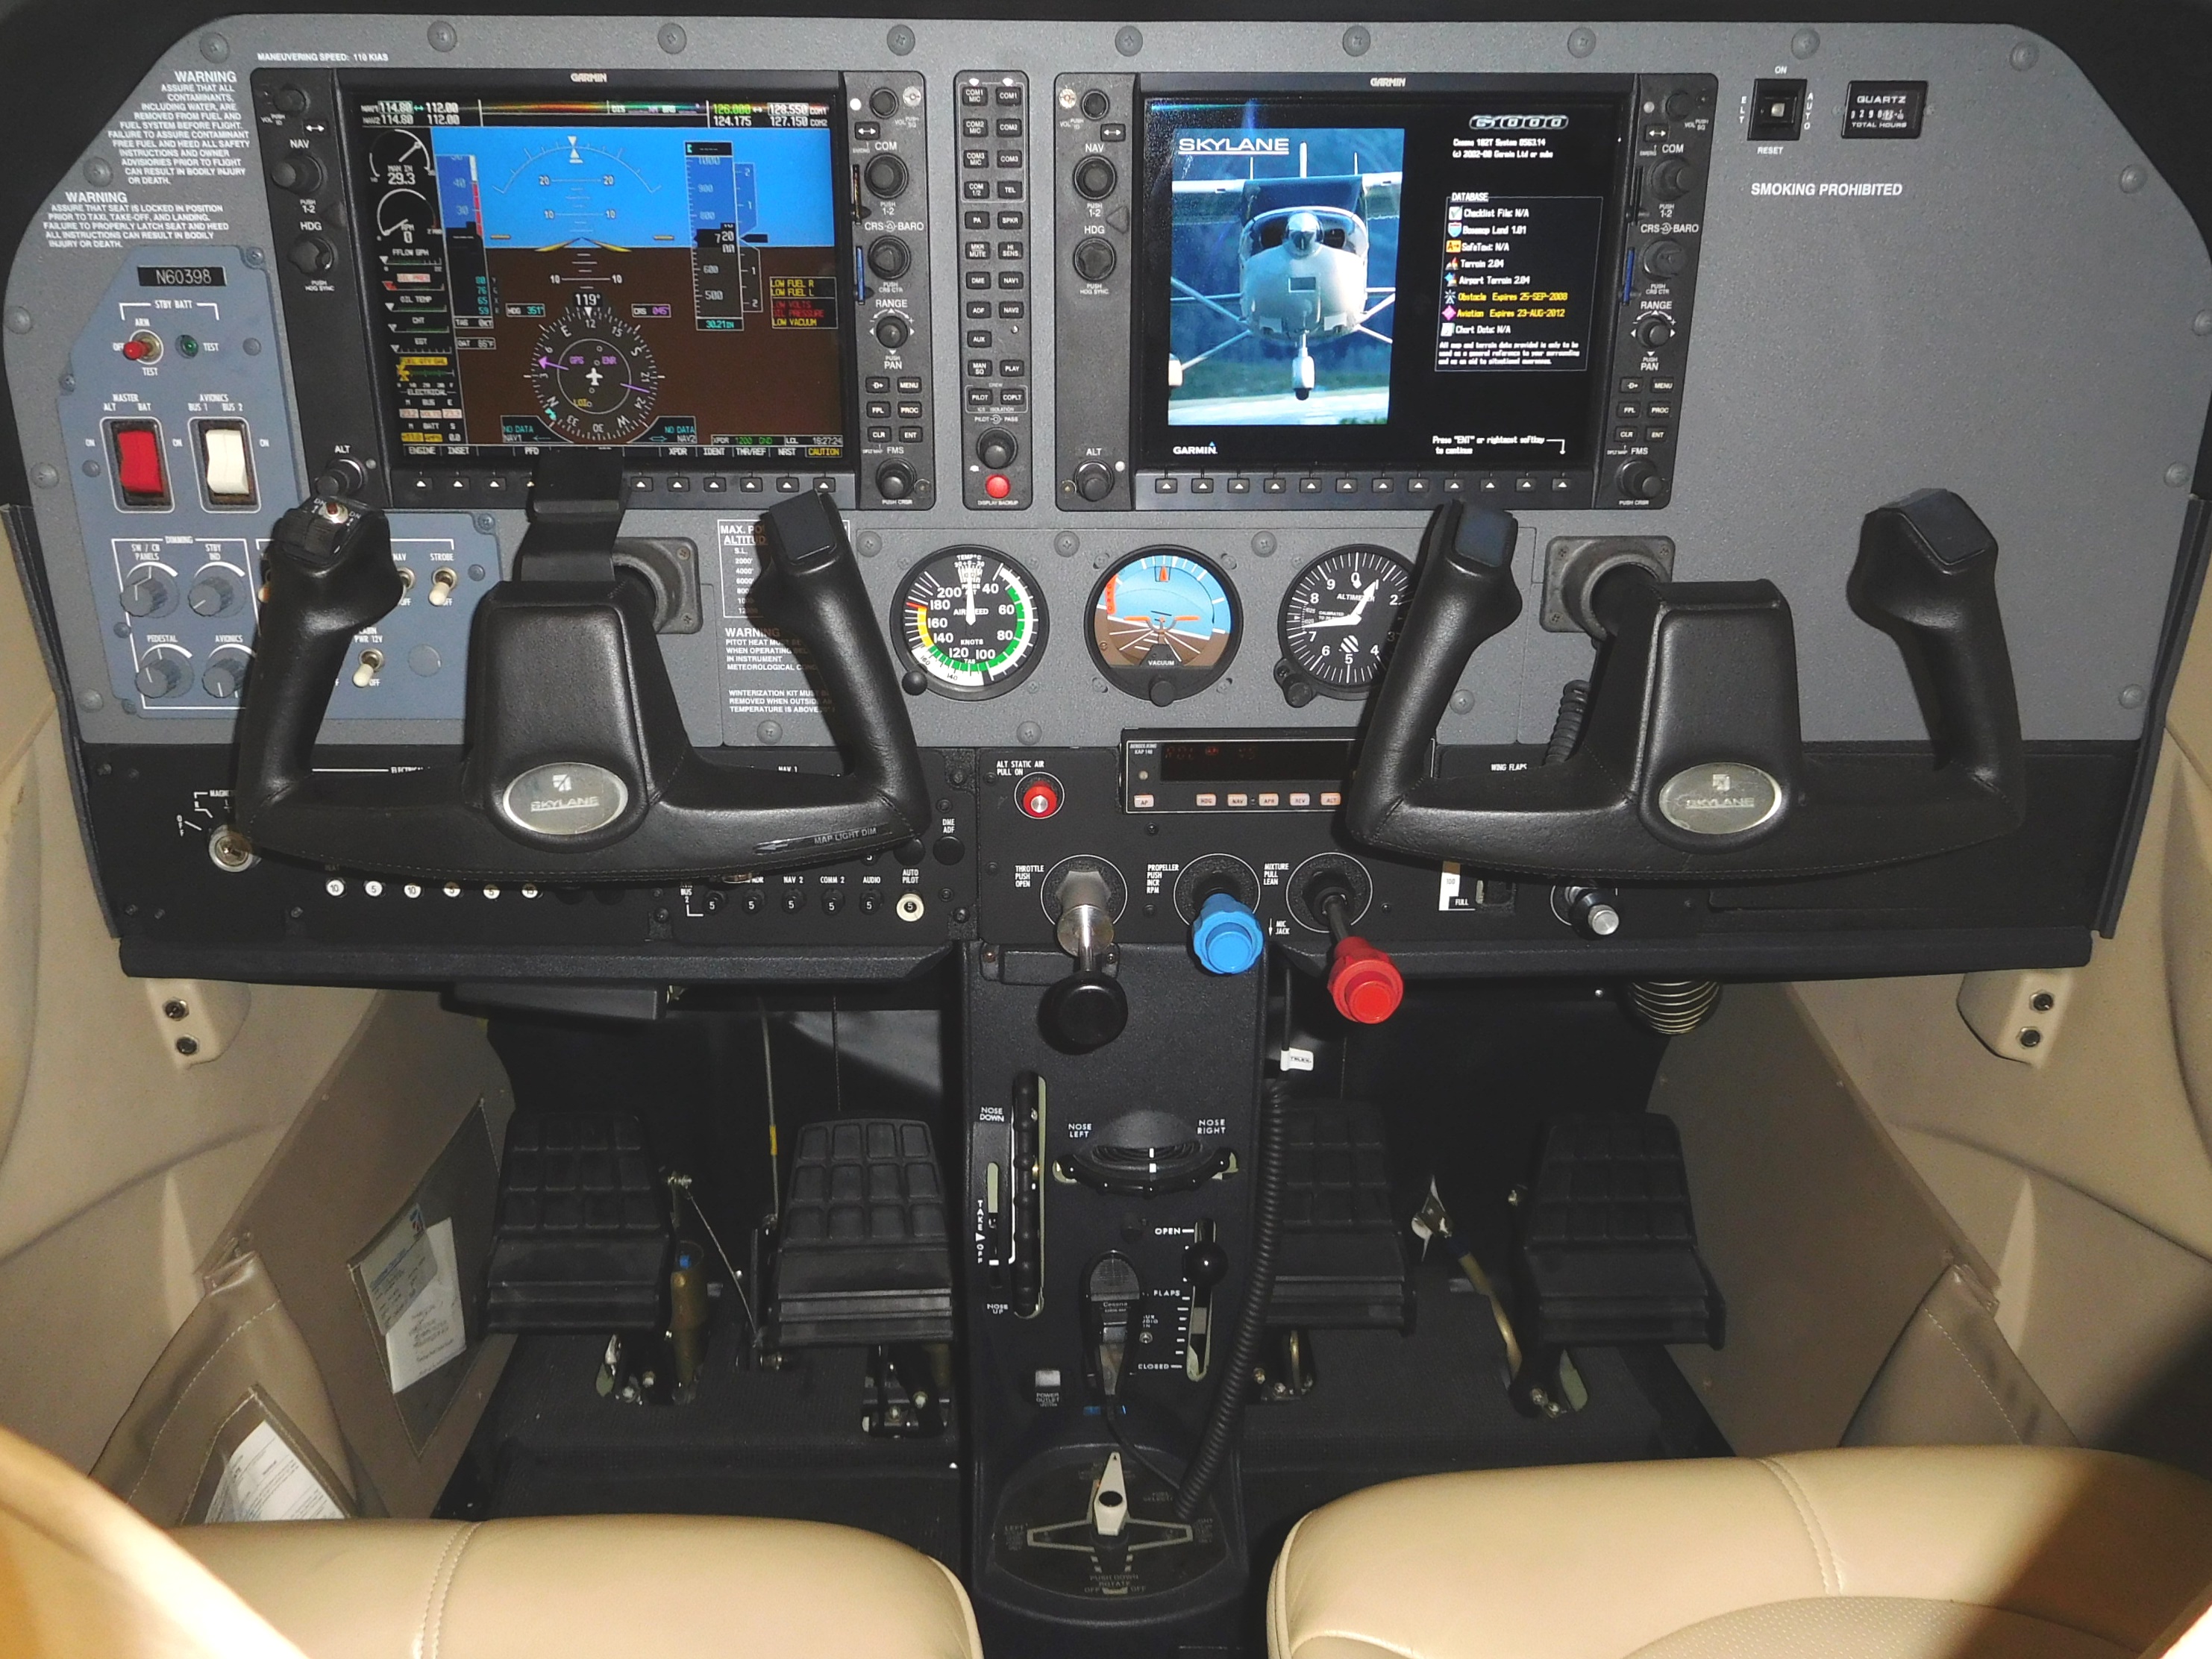 2006 Cessna 182T- N60398